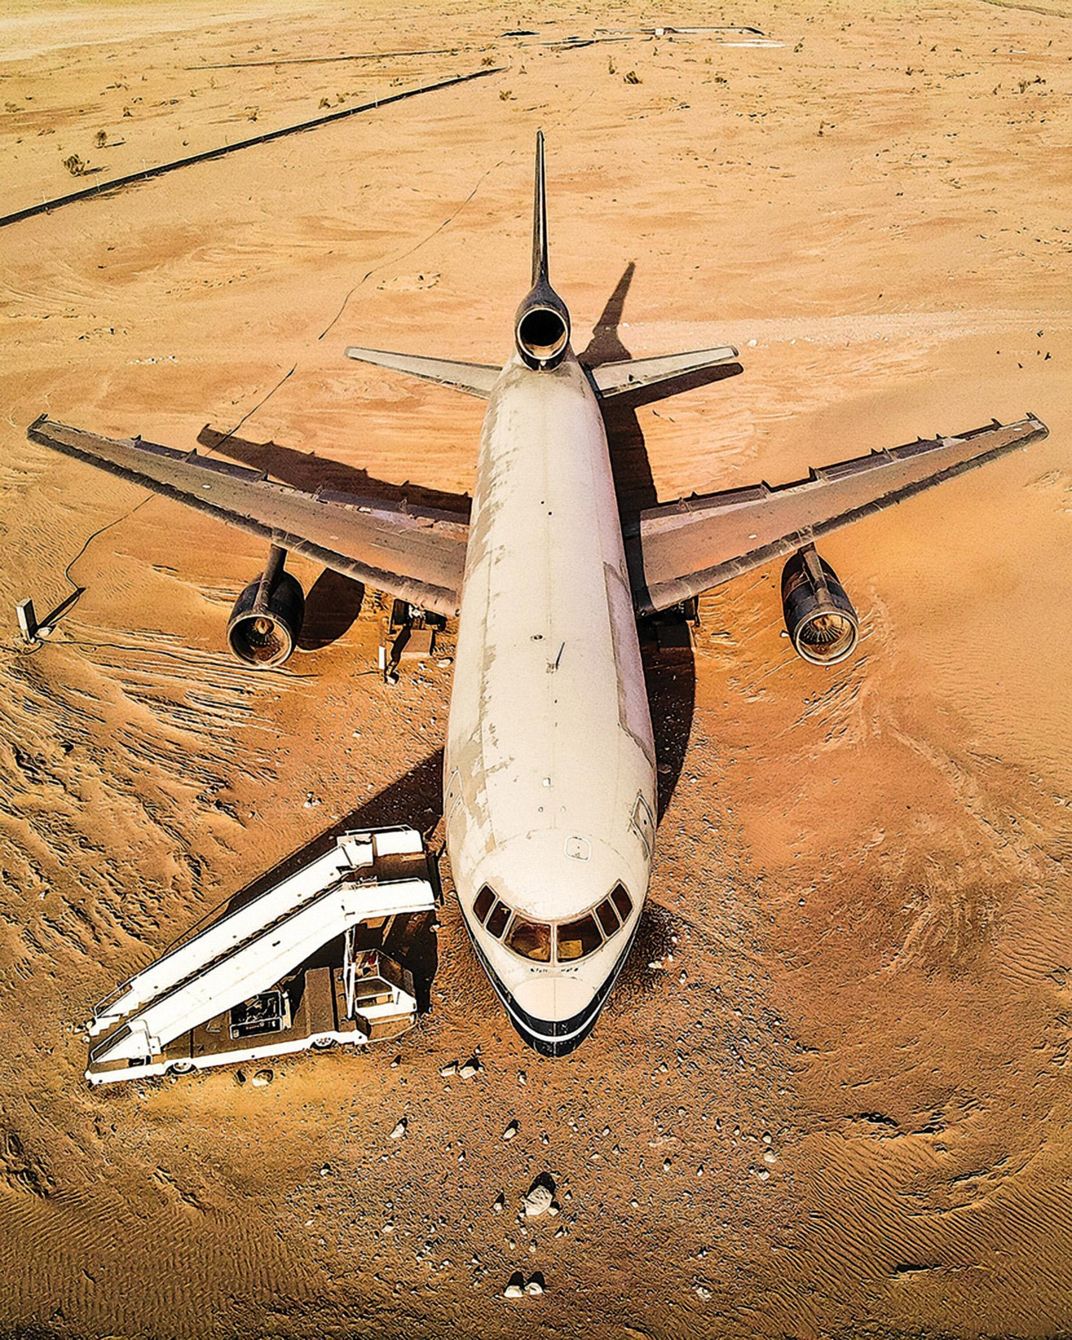 TriStar L-1011 in desert